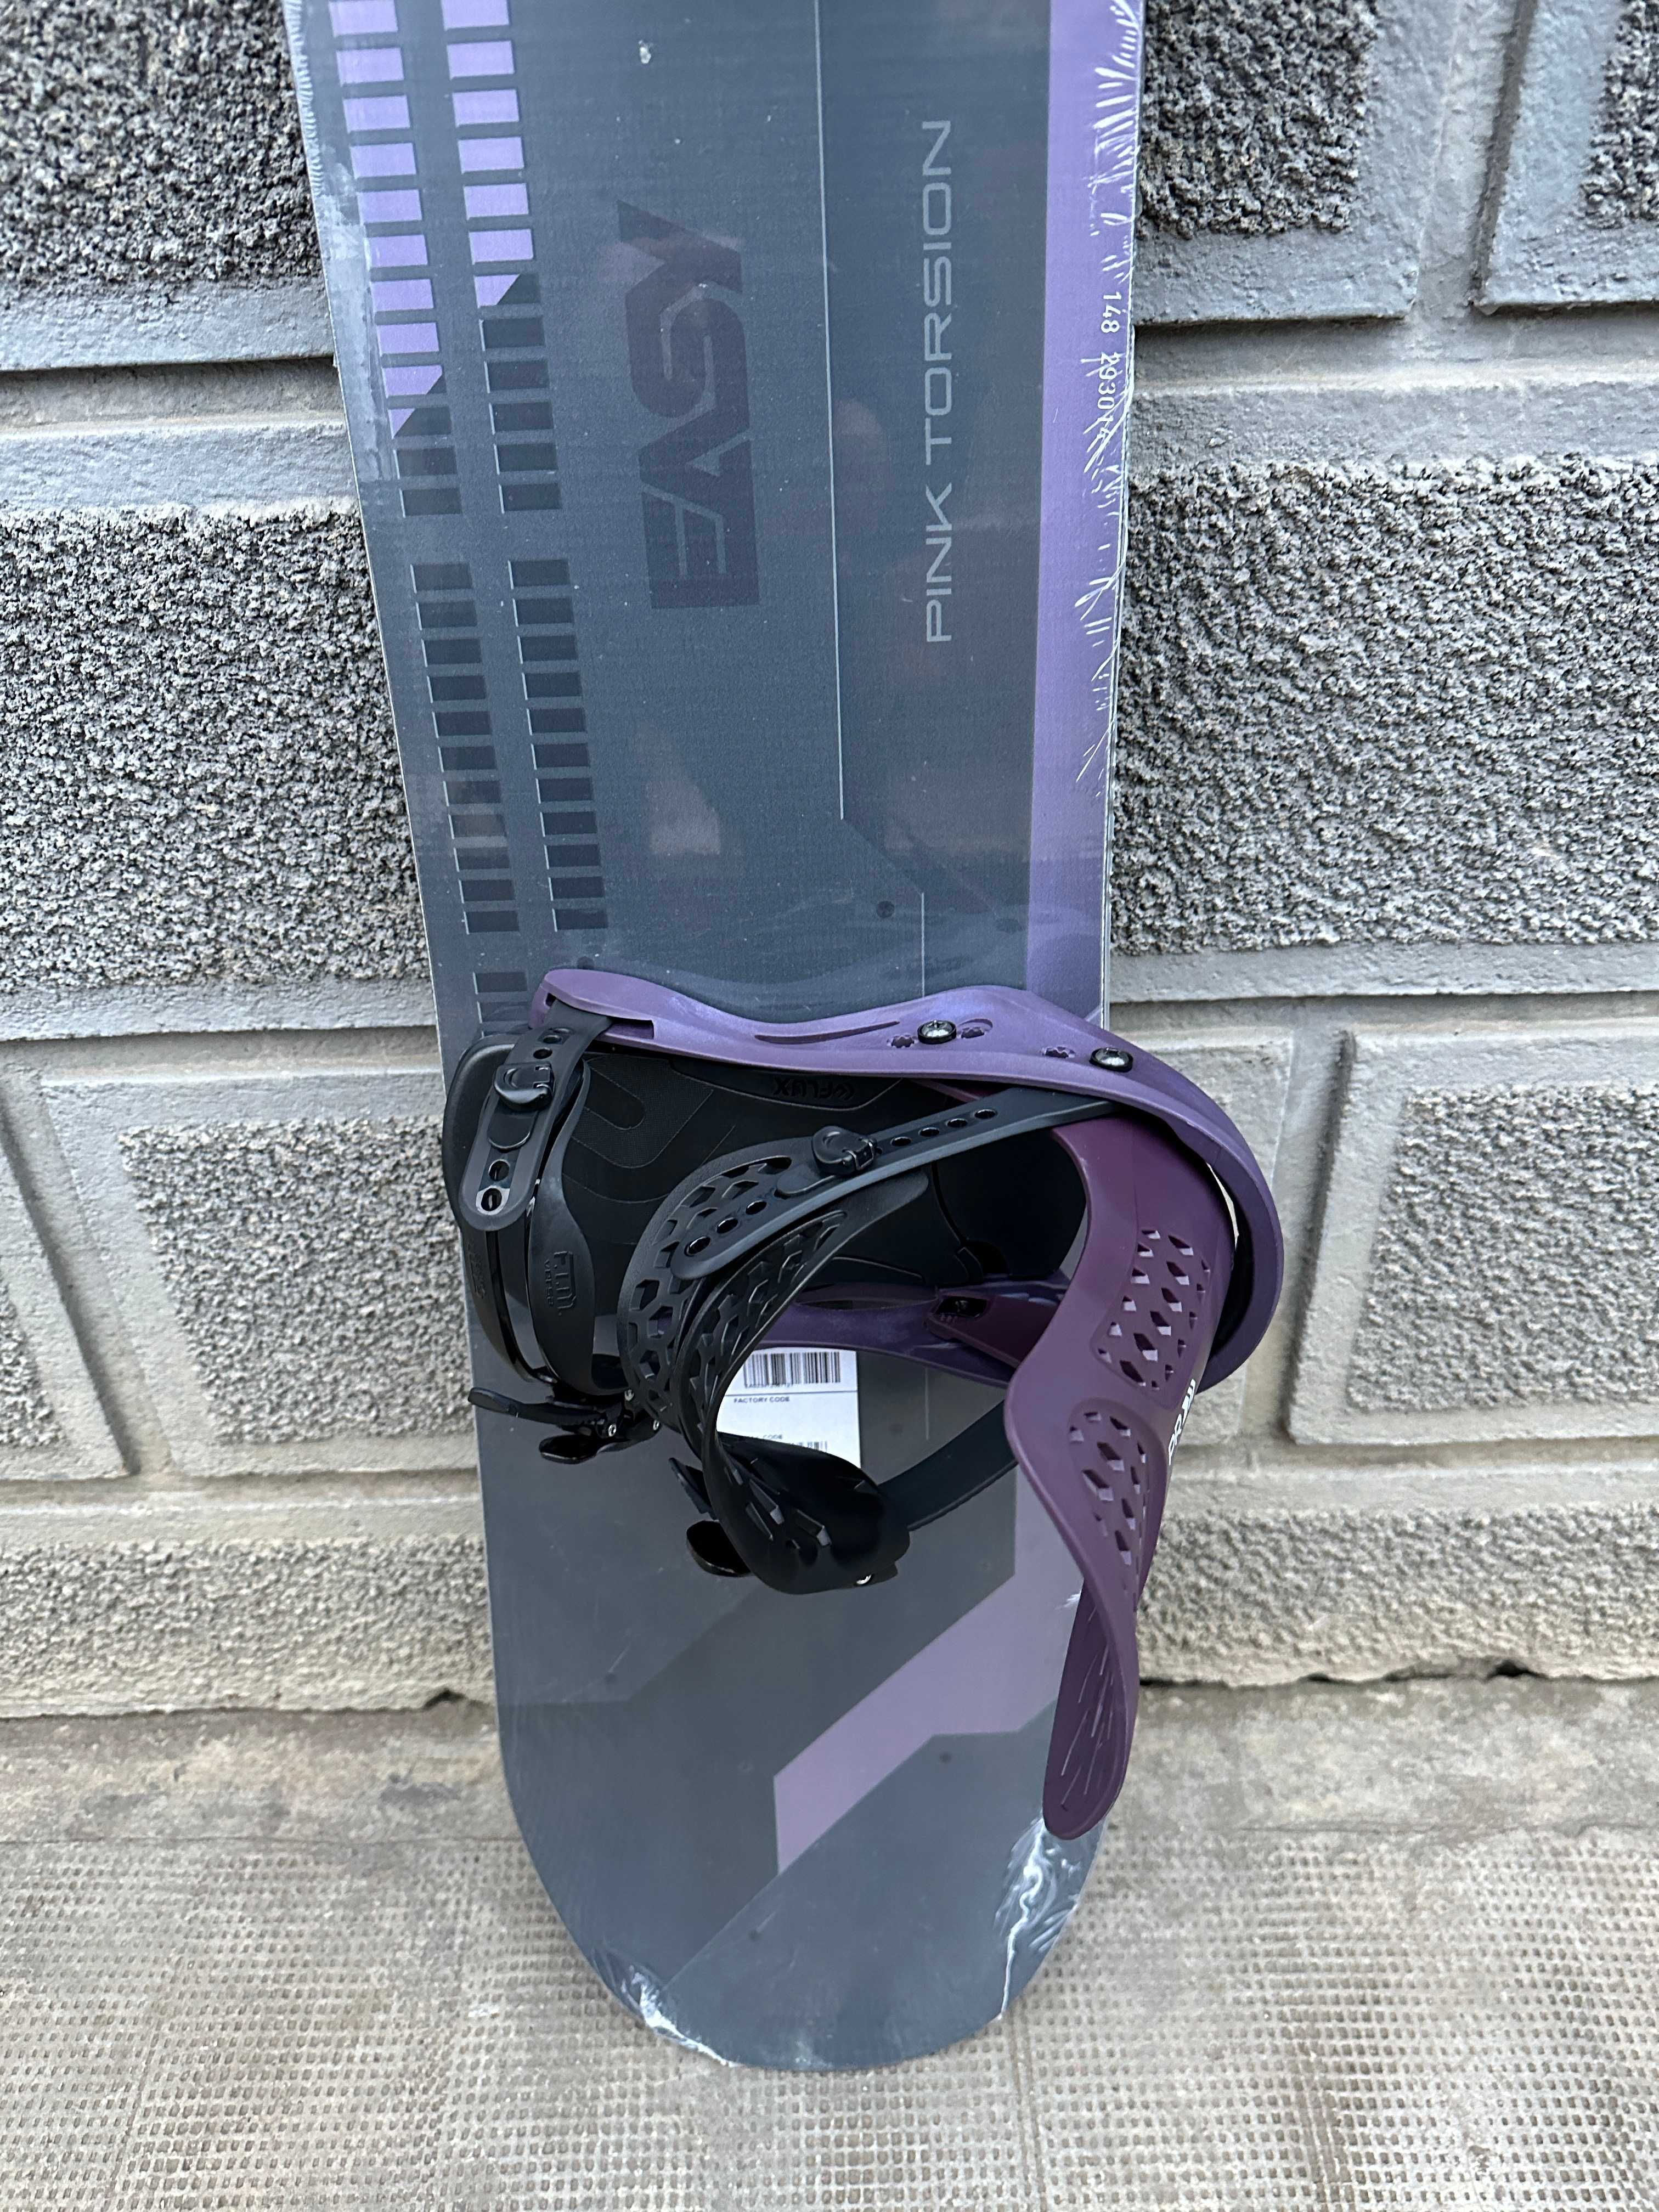 placa noua snowboard easy pink torsion L148cm